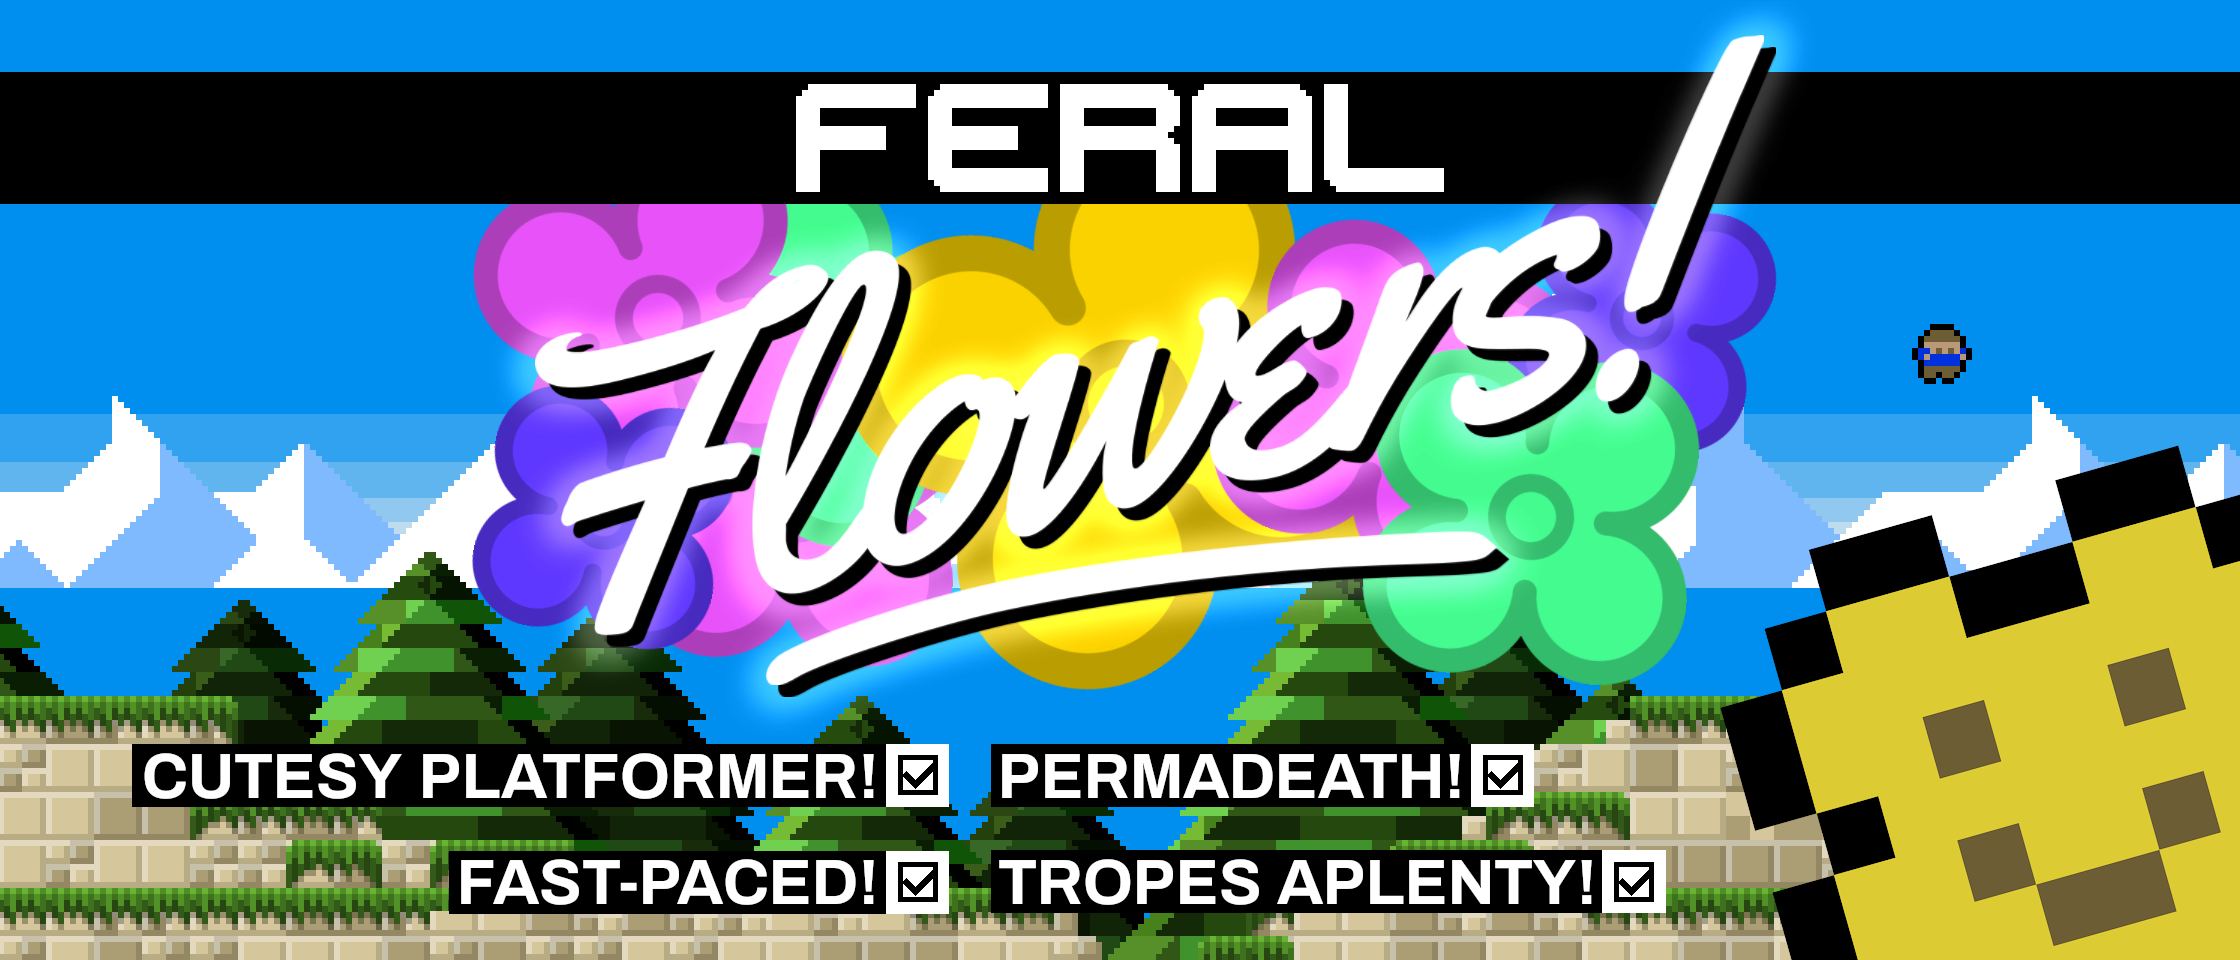 Feral Flowers